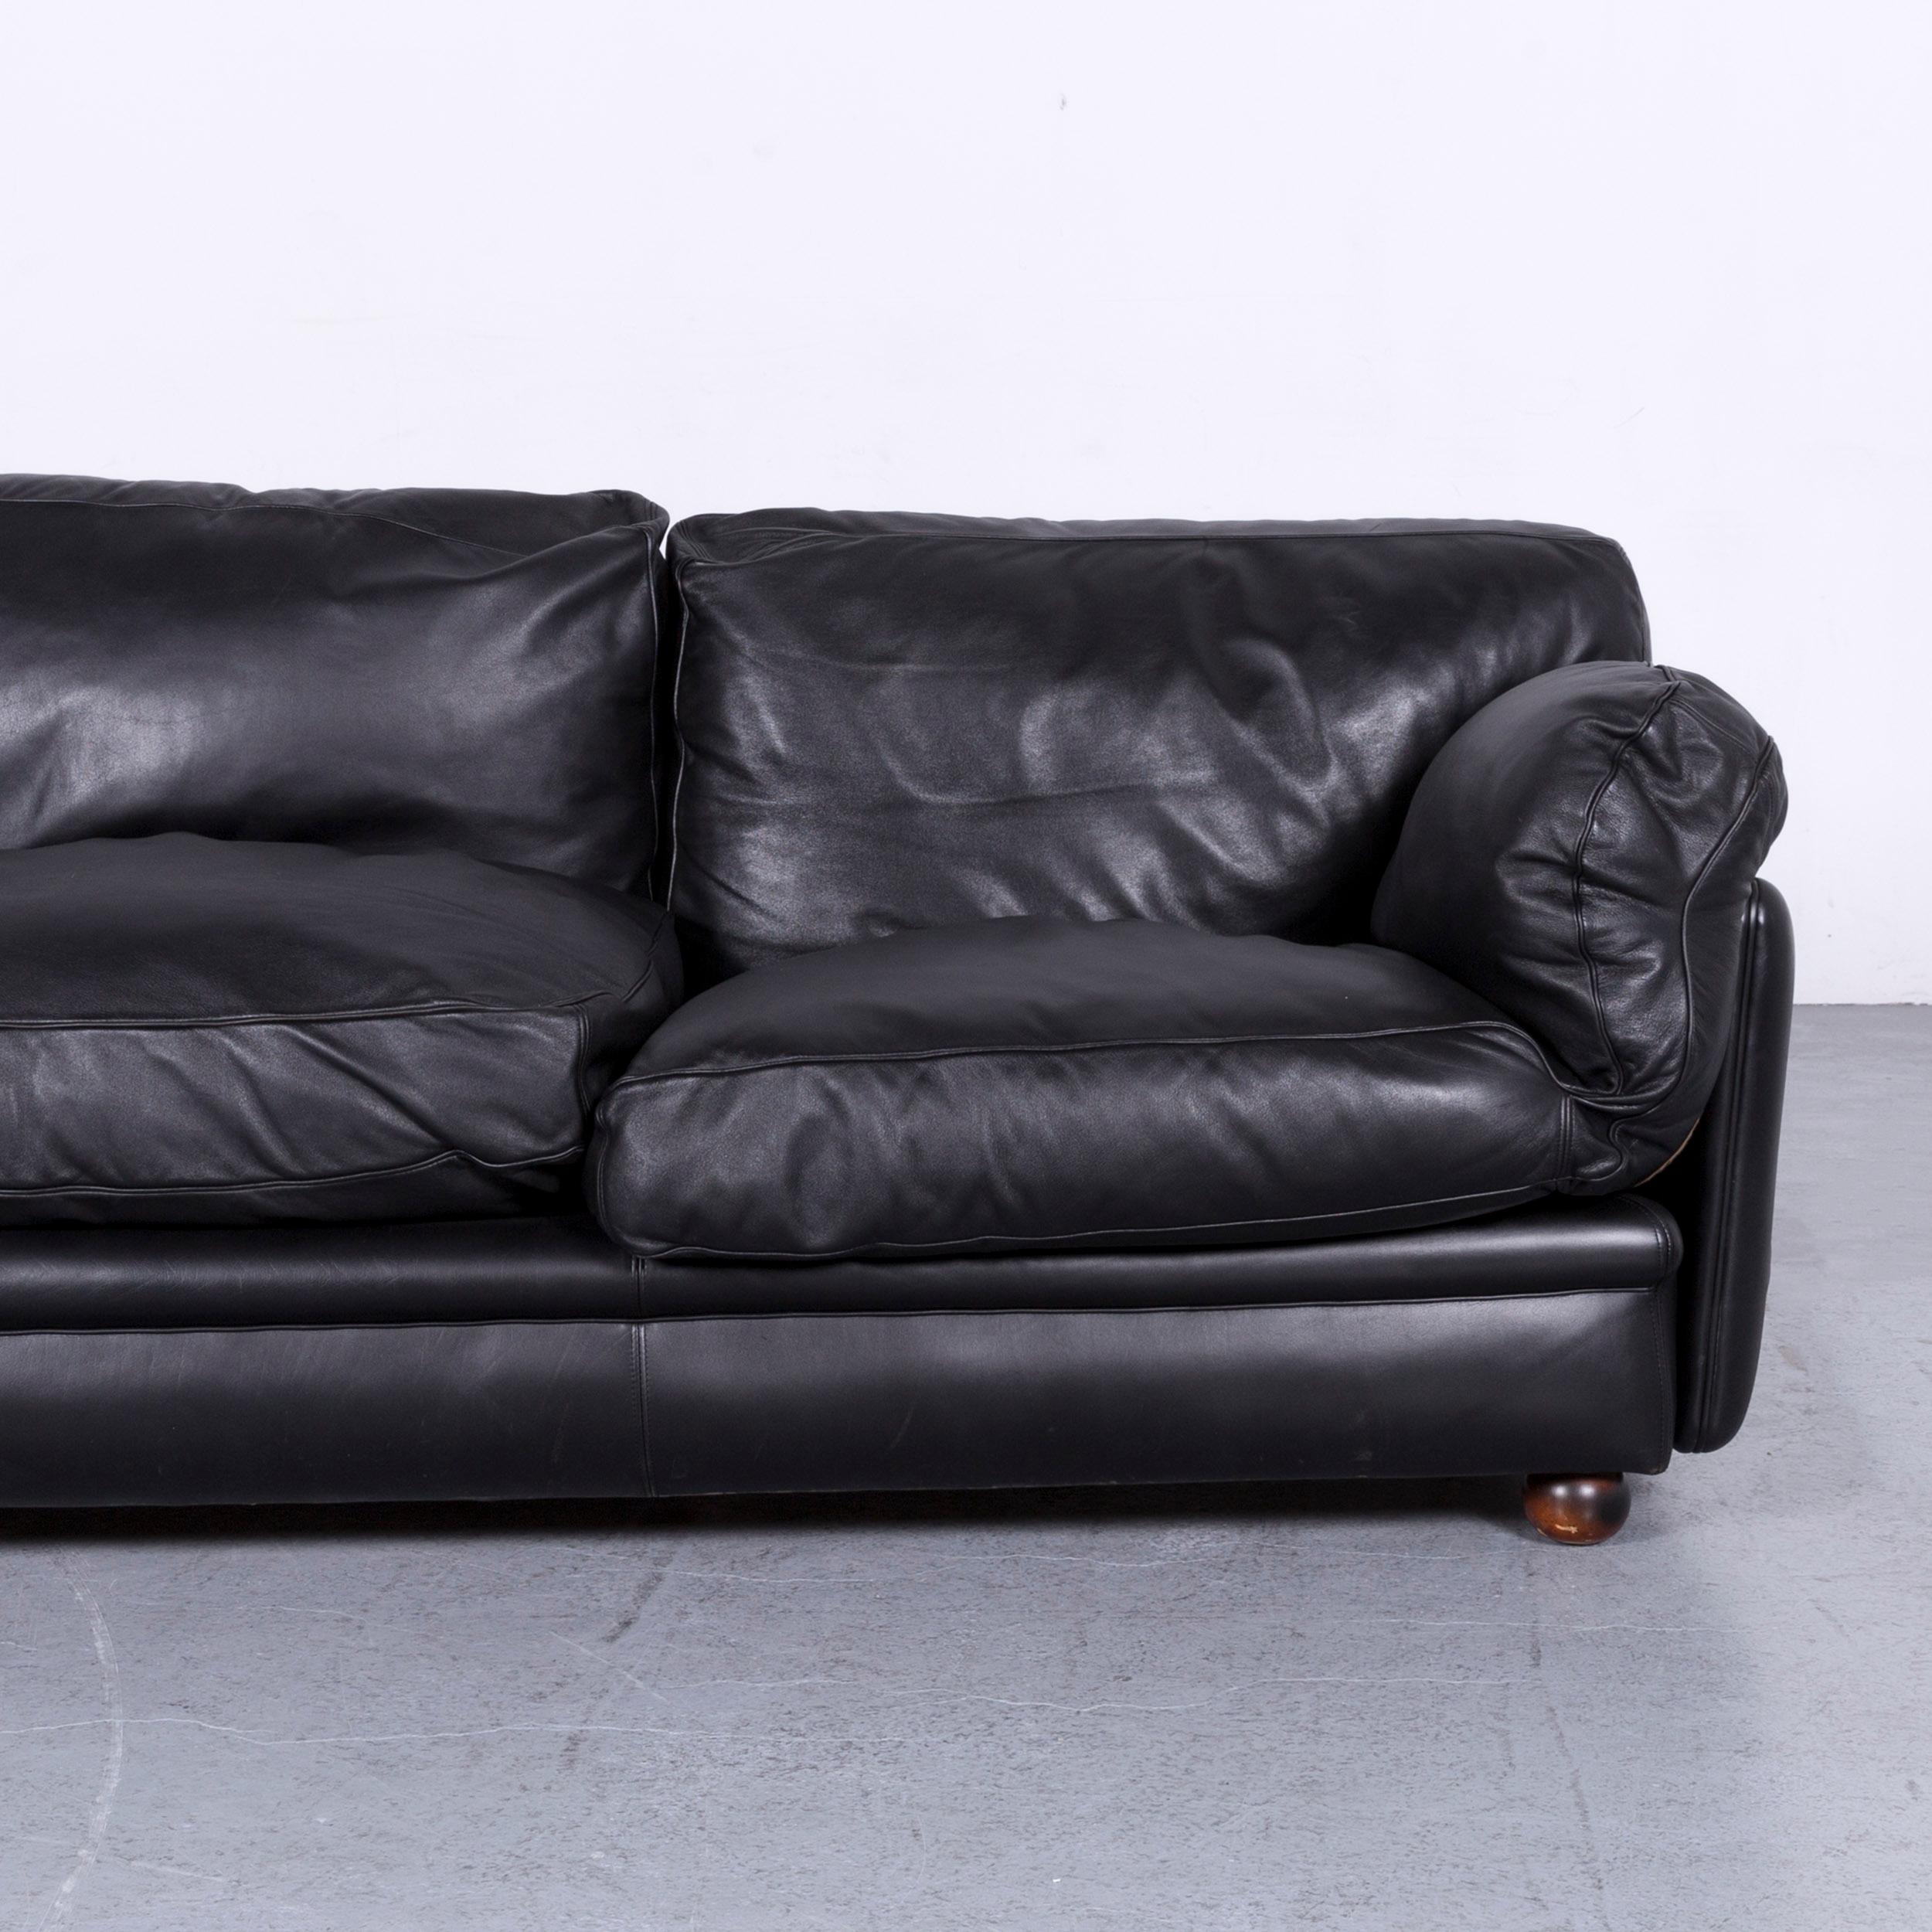 Italian Poltrona Frau Leather Sofa Black Genuine Leather Three-Seat Couch For Sale